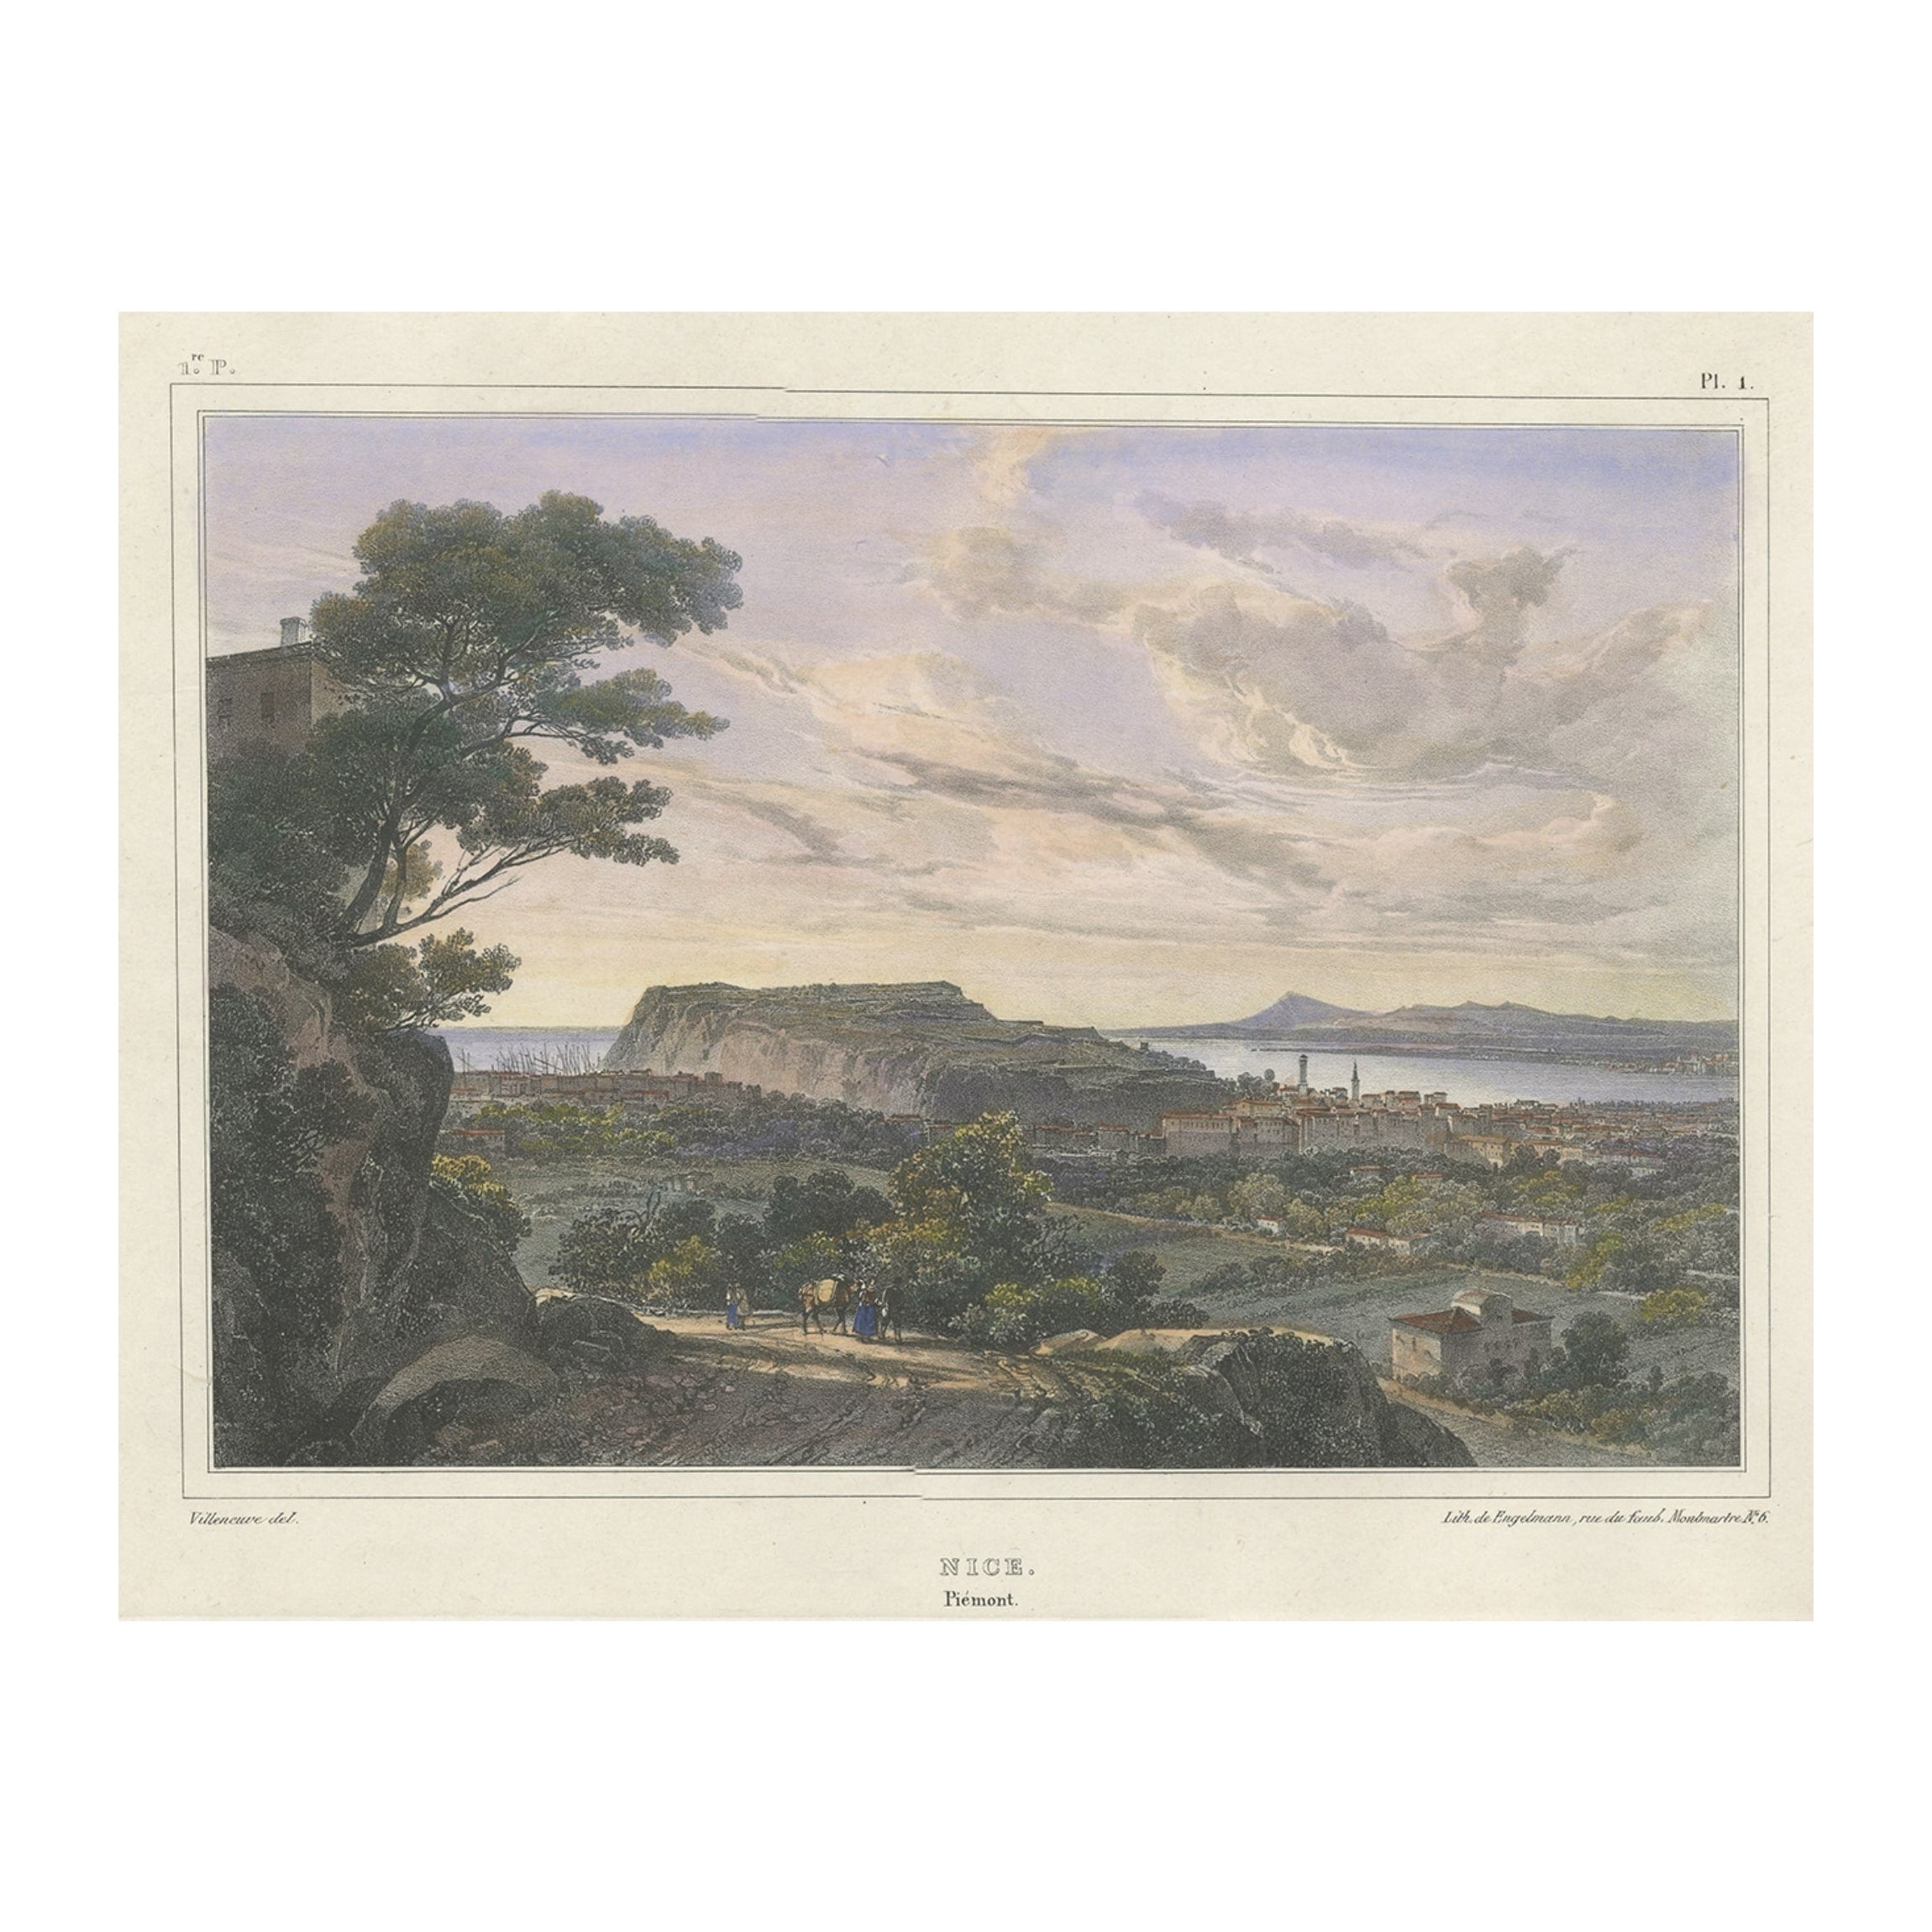 Impression ancienne de Piemont, Nice en France, vers 1830 en vente